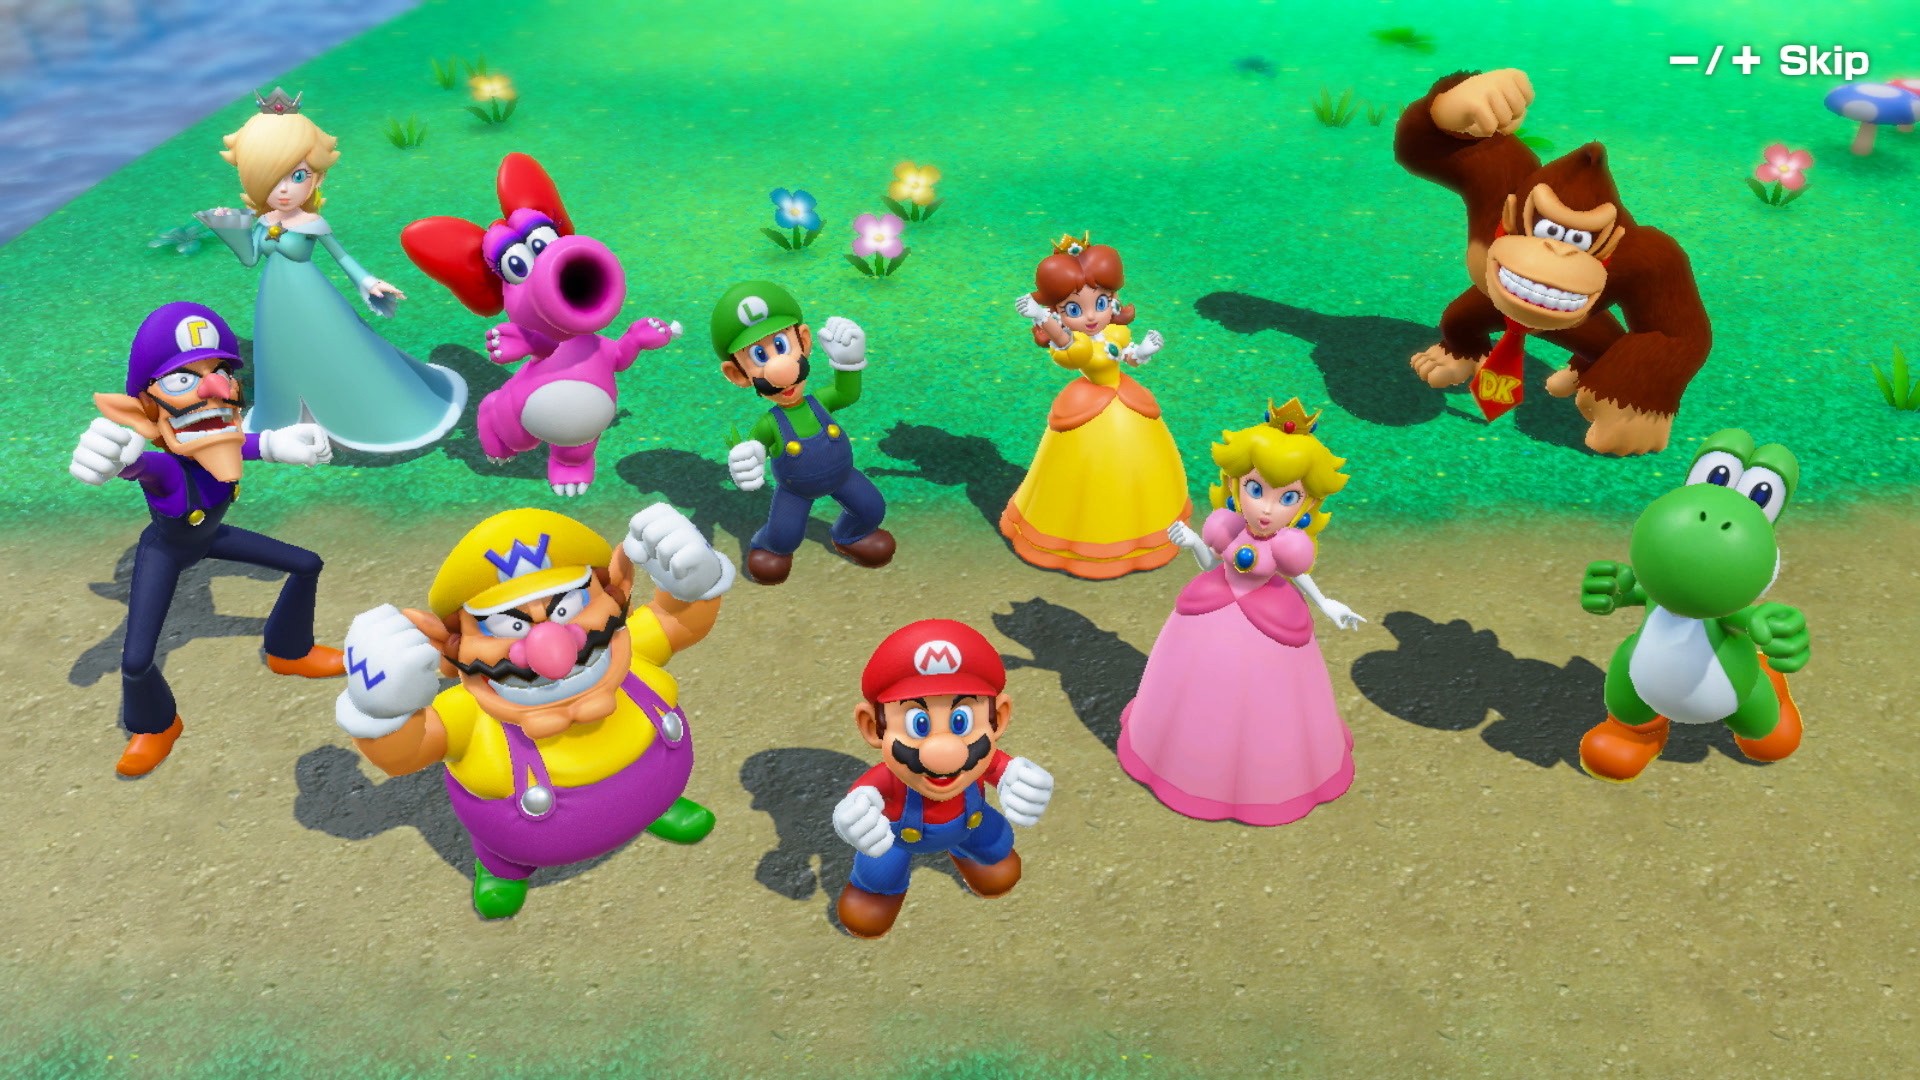 Nintendo anuncia novos jogos e empolga as redes sociais. Mas o